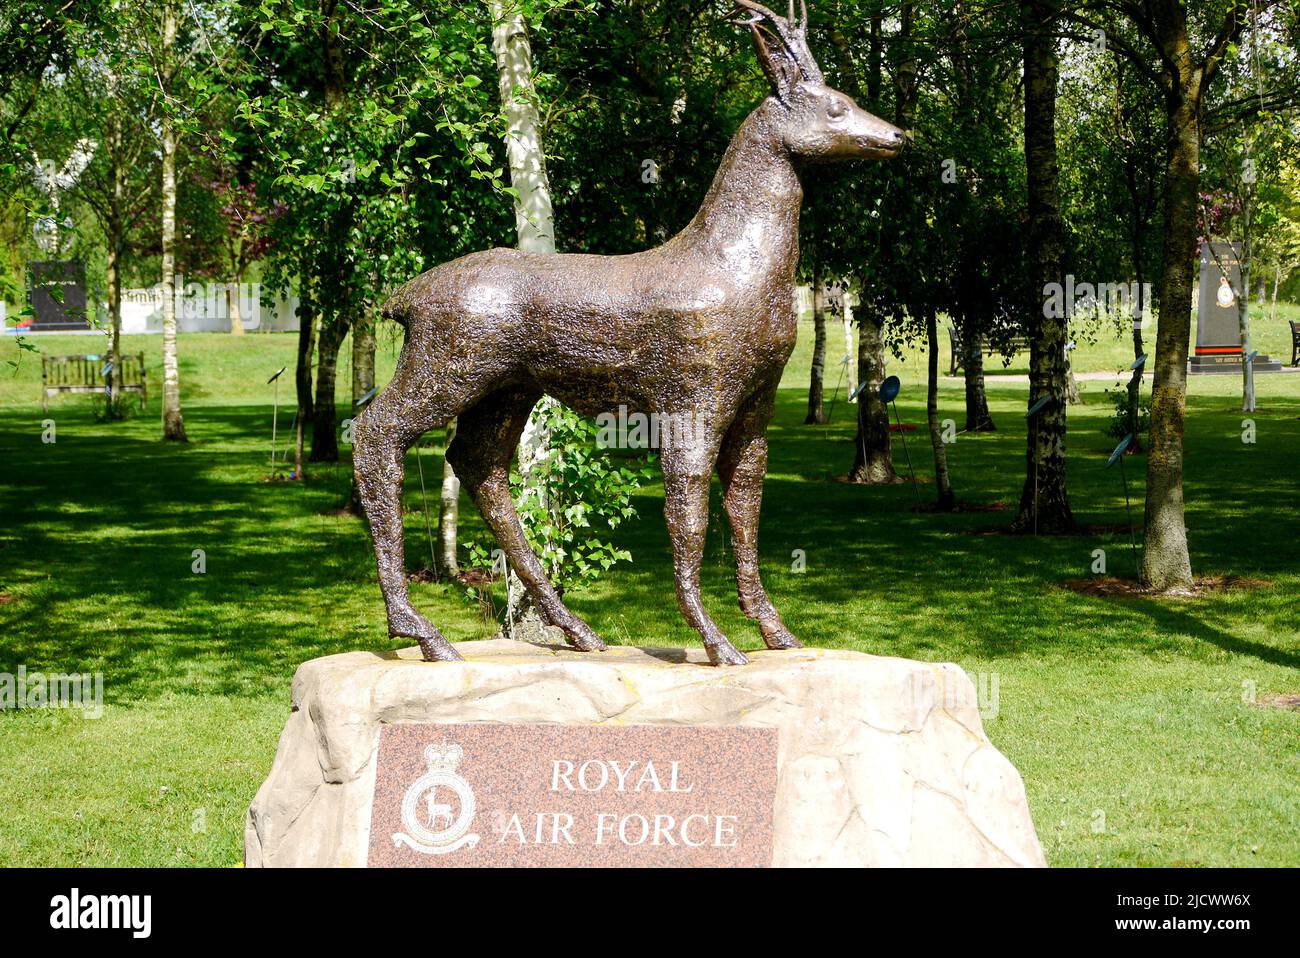 Royal Air Force Physical Education Bronze Roebuck Statue Memorial im National Memorial Arboretum, Staffordshire, England, Großbritannien. Stockfoto